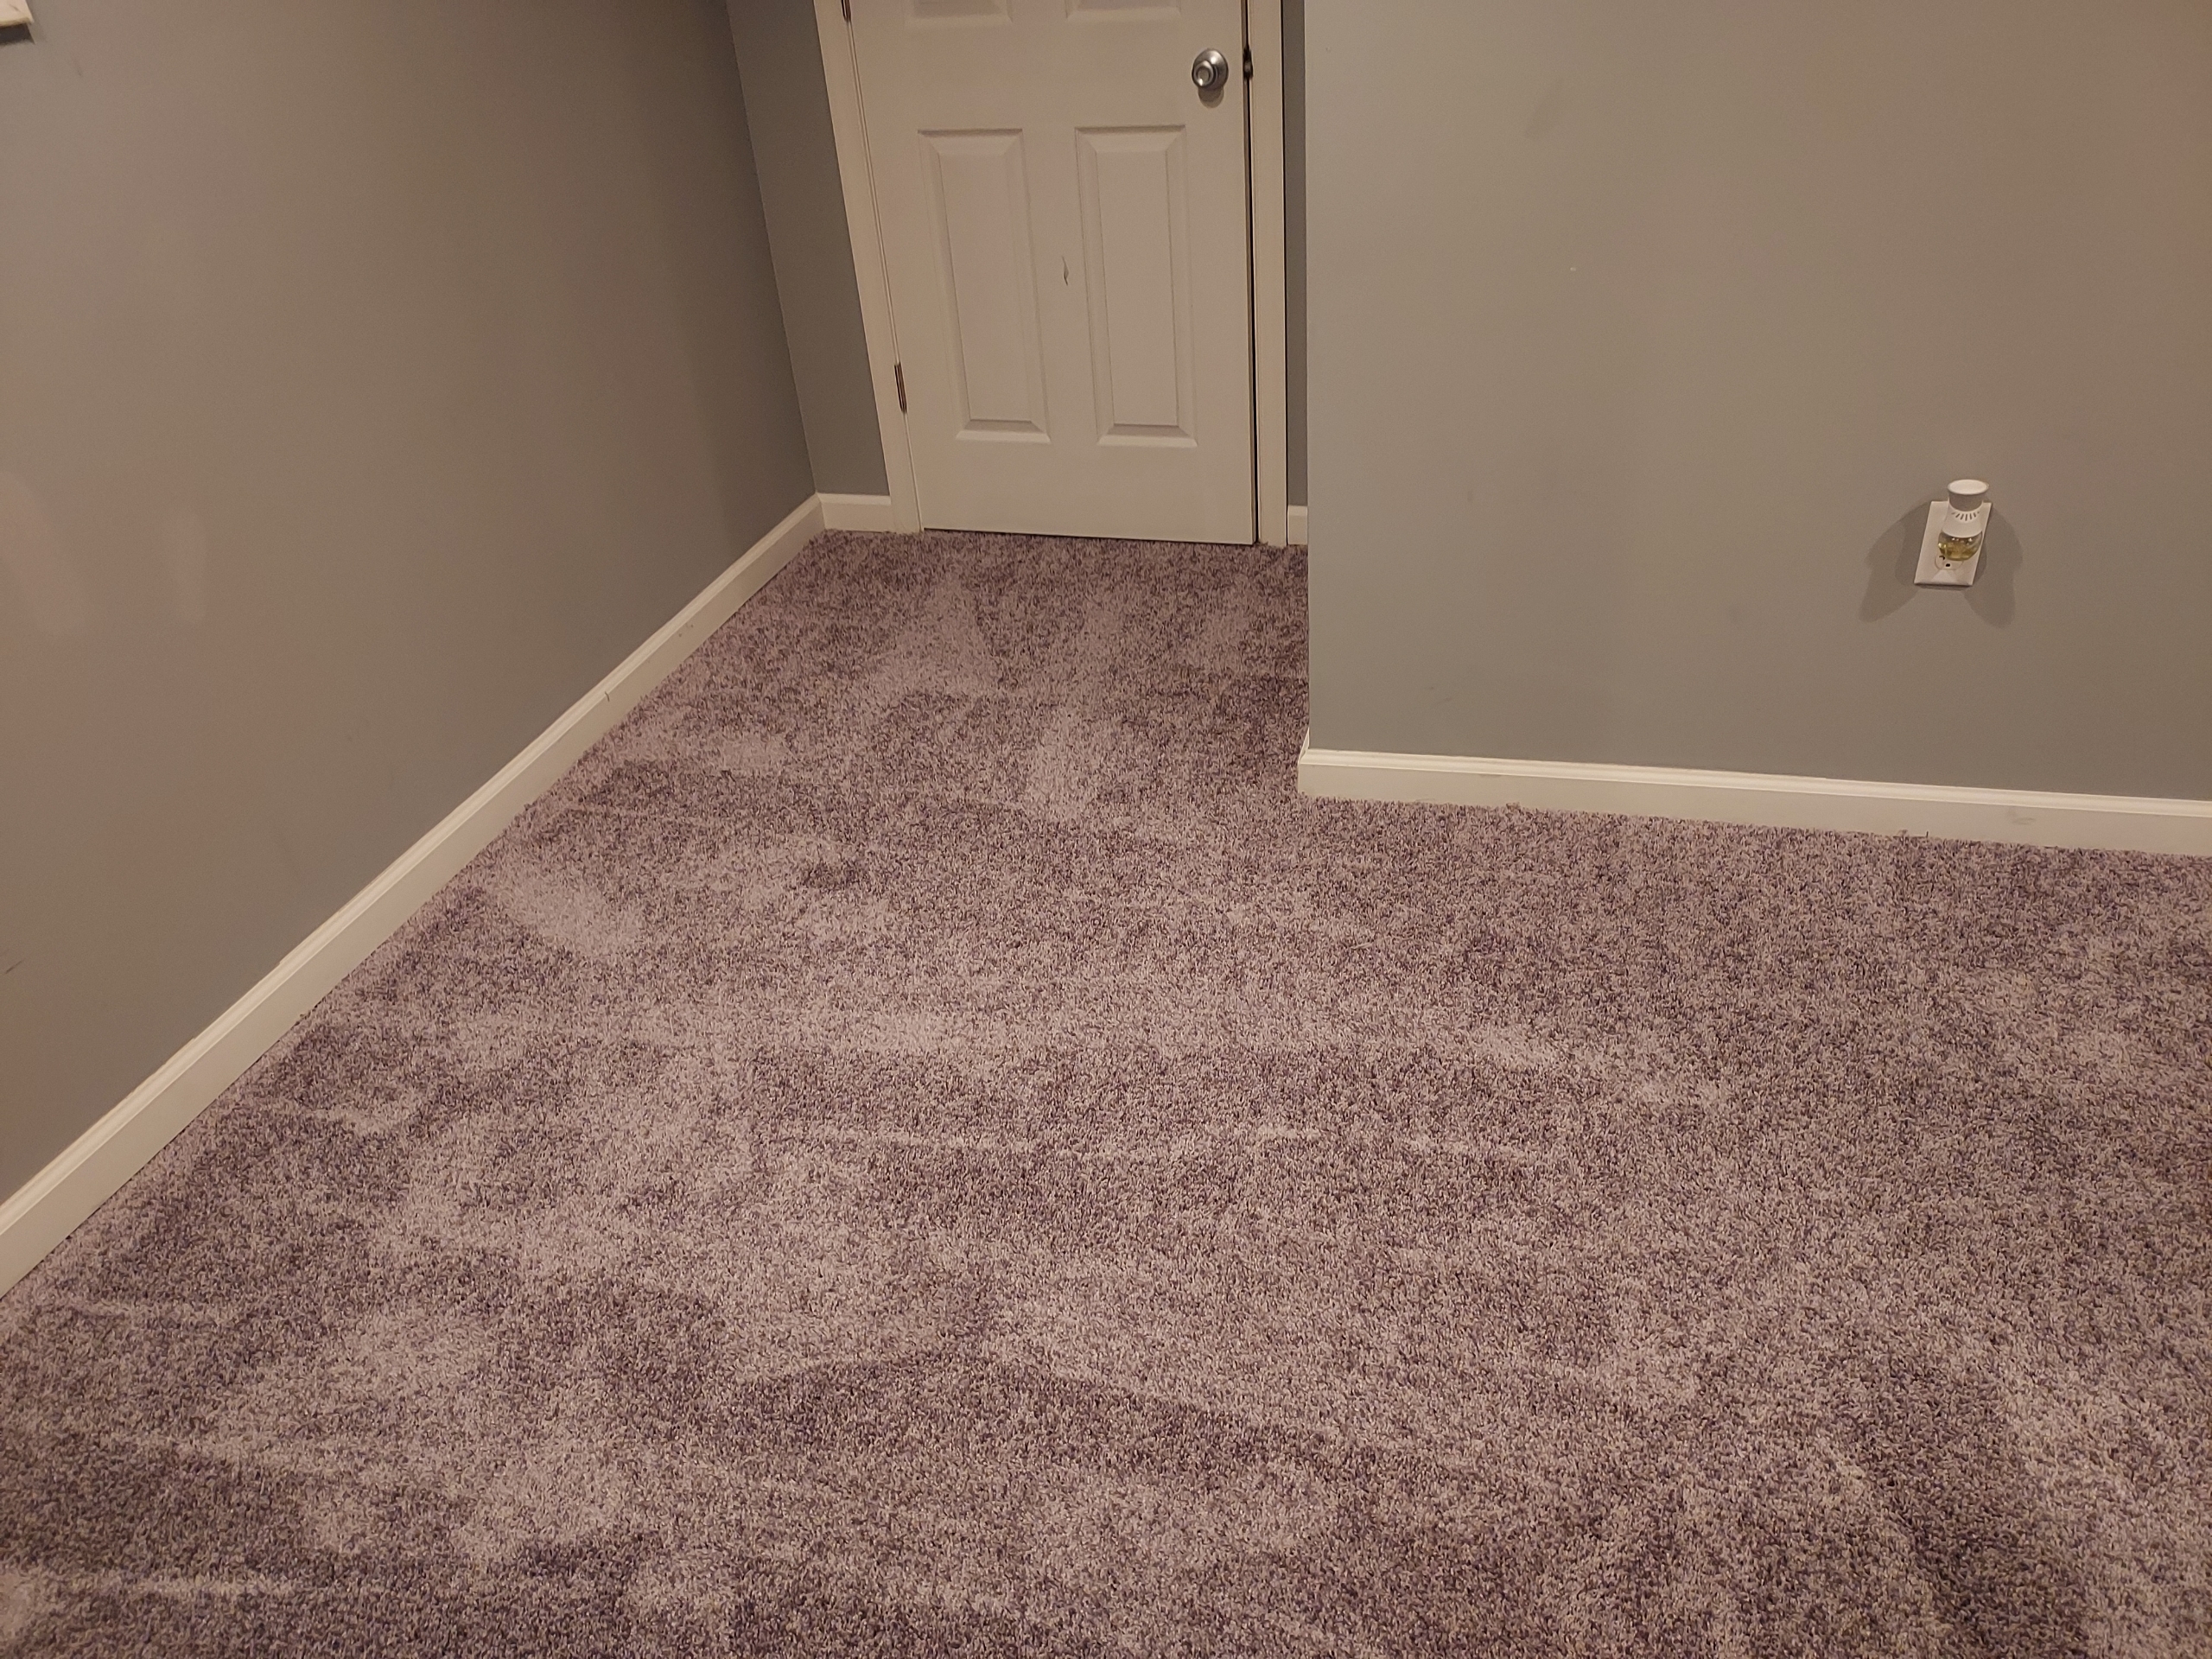  After Carpet Install